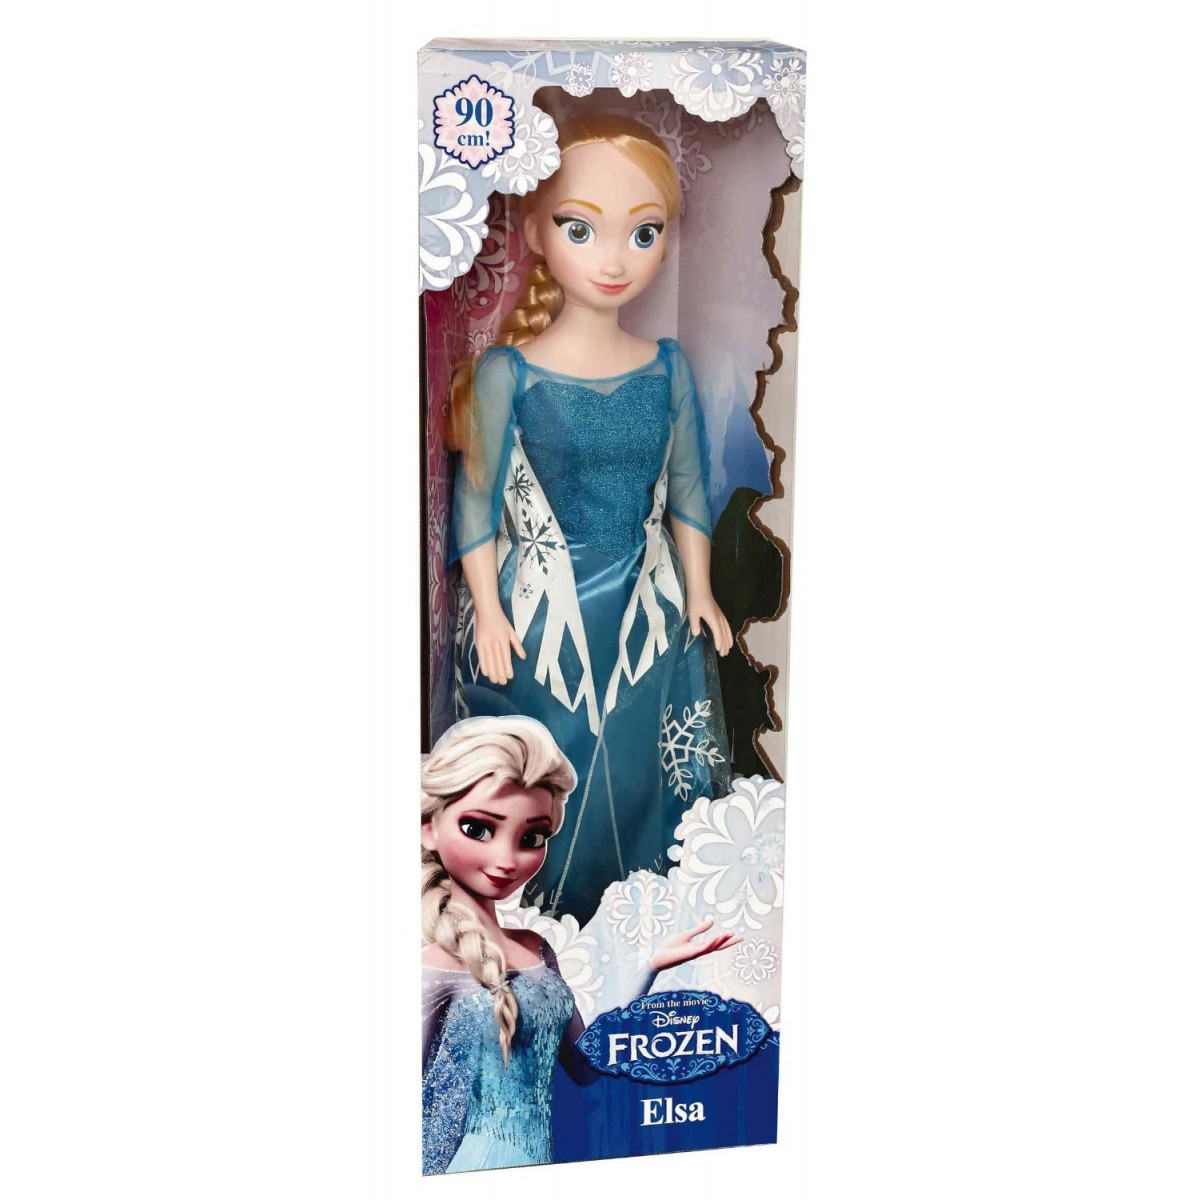 Bambola Frozen Elsa gigante 90 cm di Giocheria HDG70200